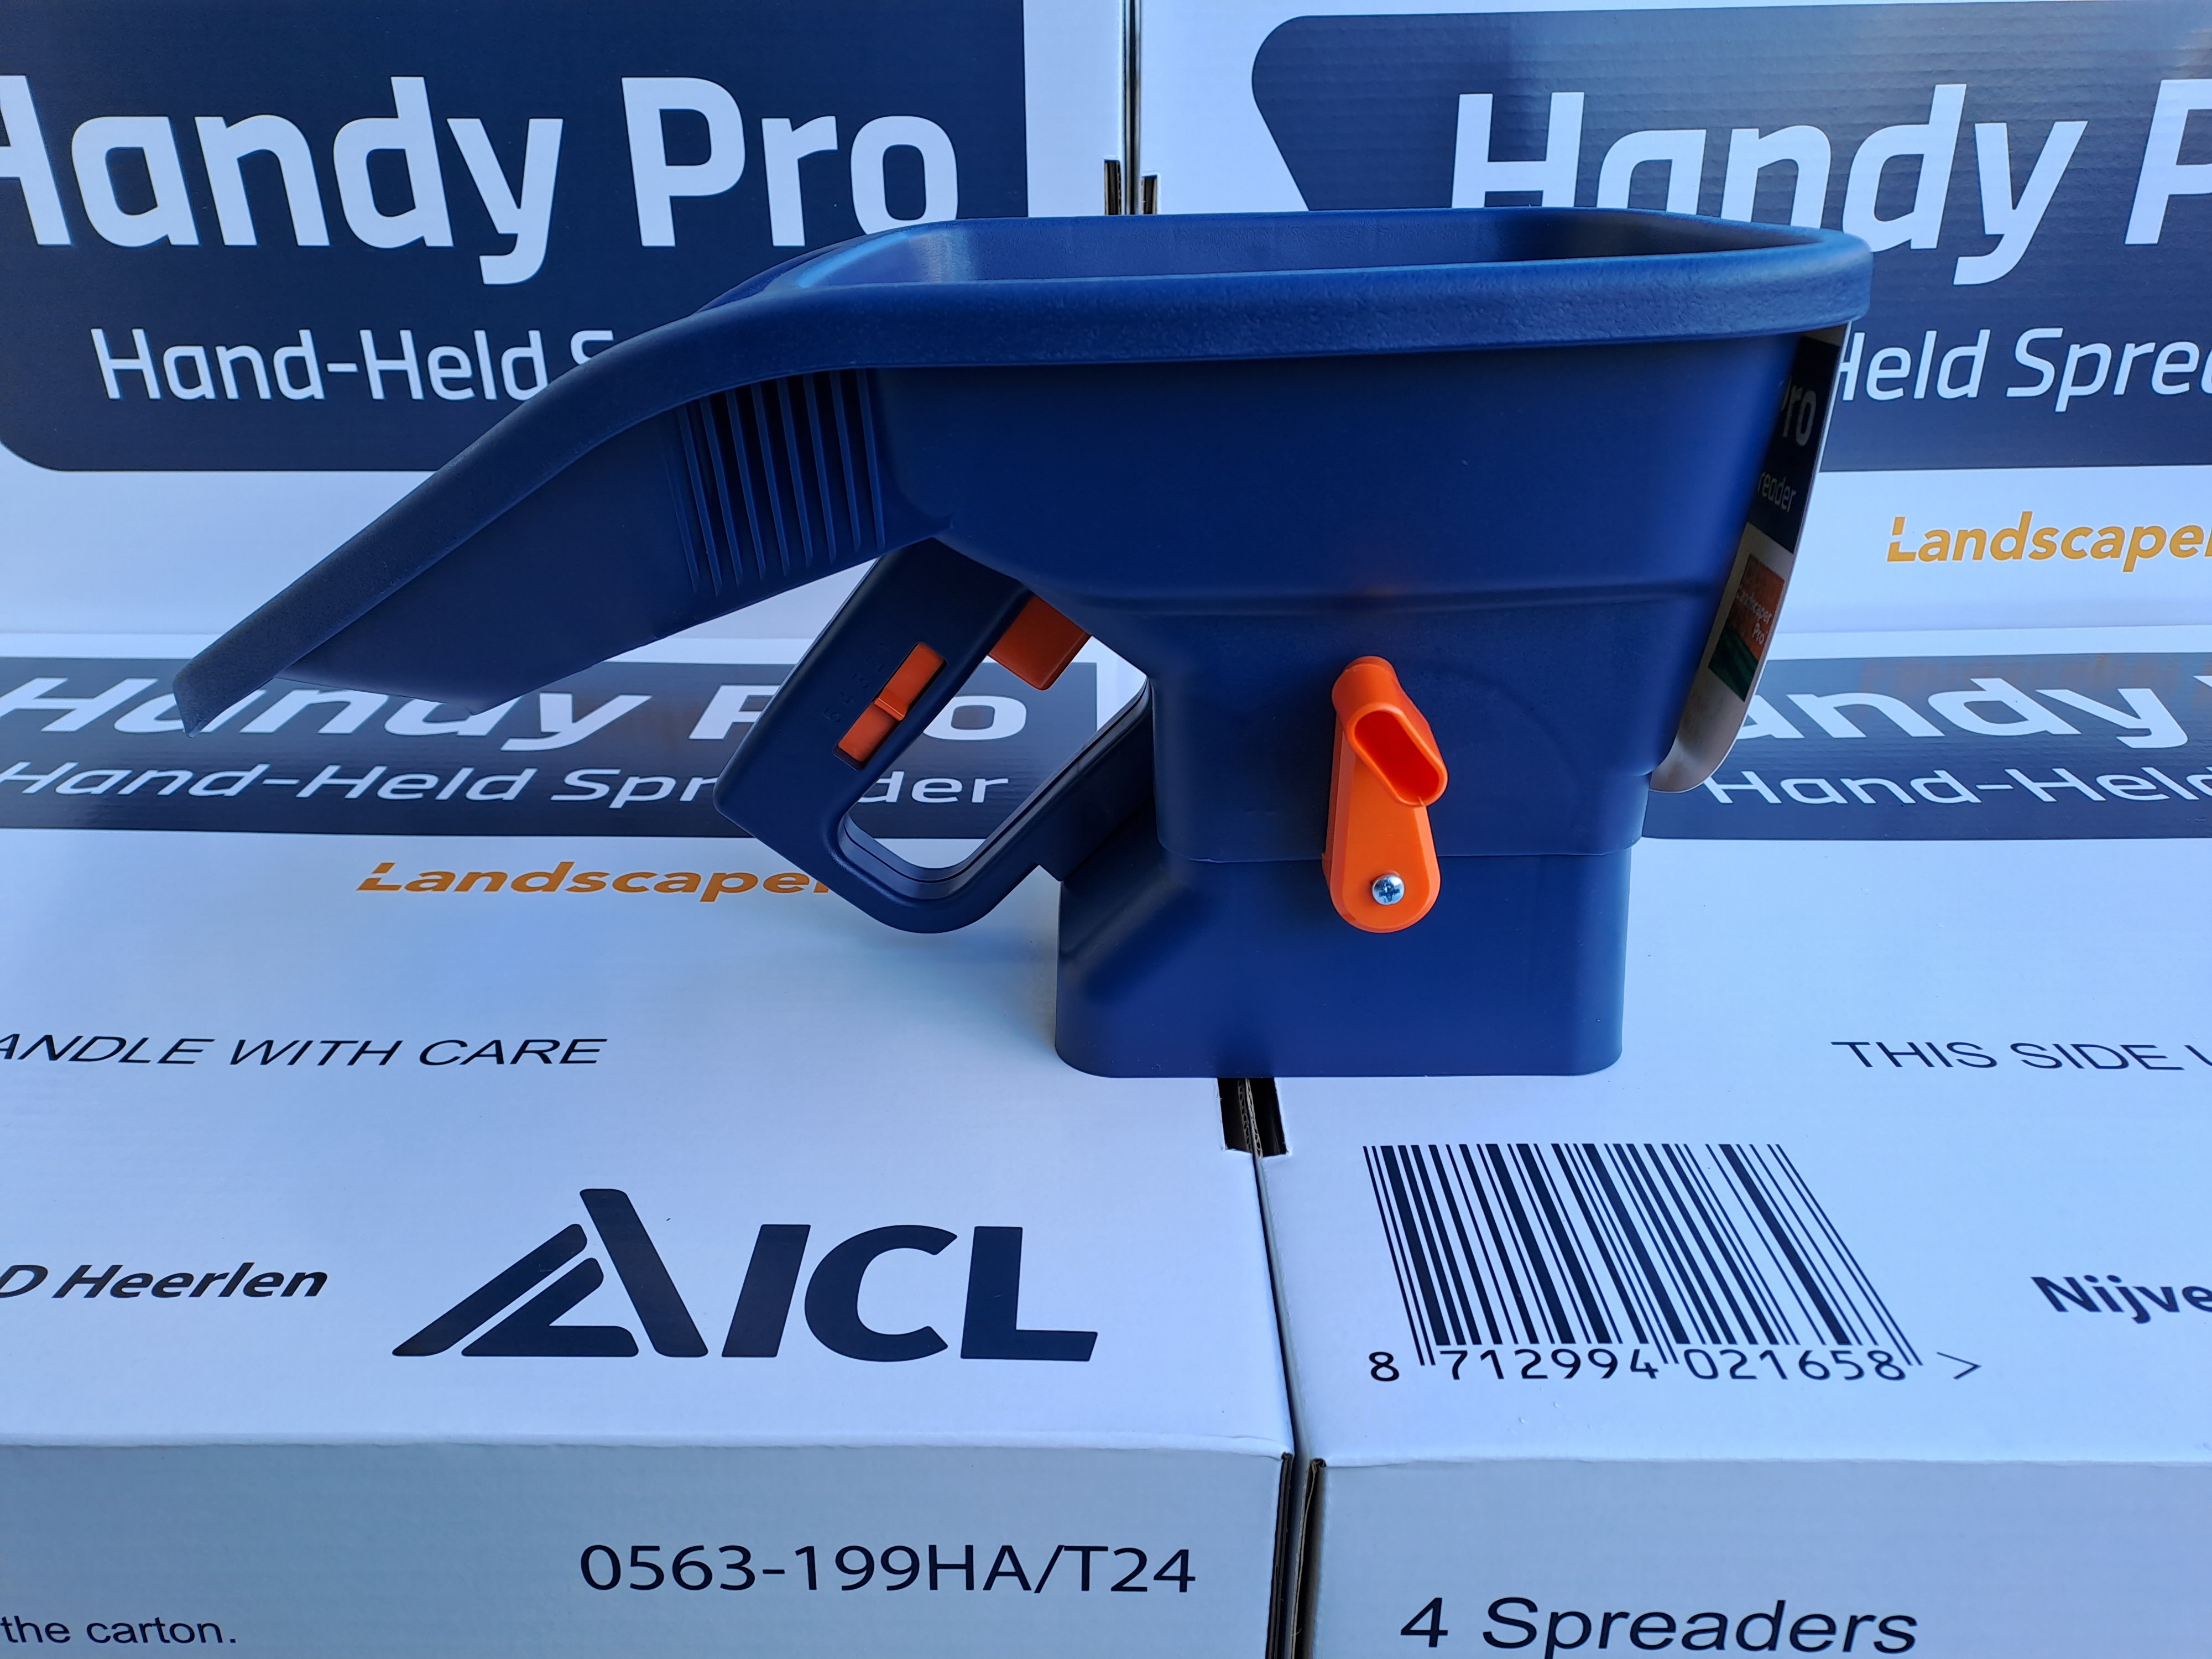 ICL Handy Pro manual fertilizer spreader